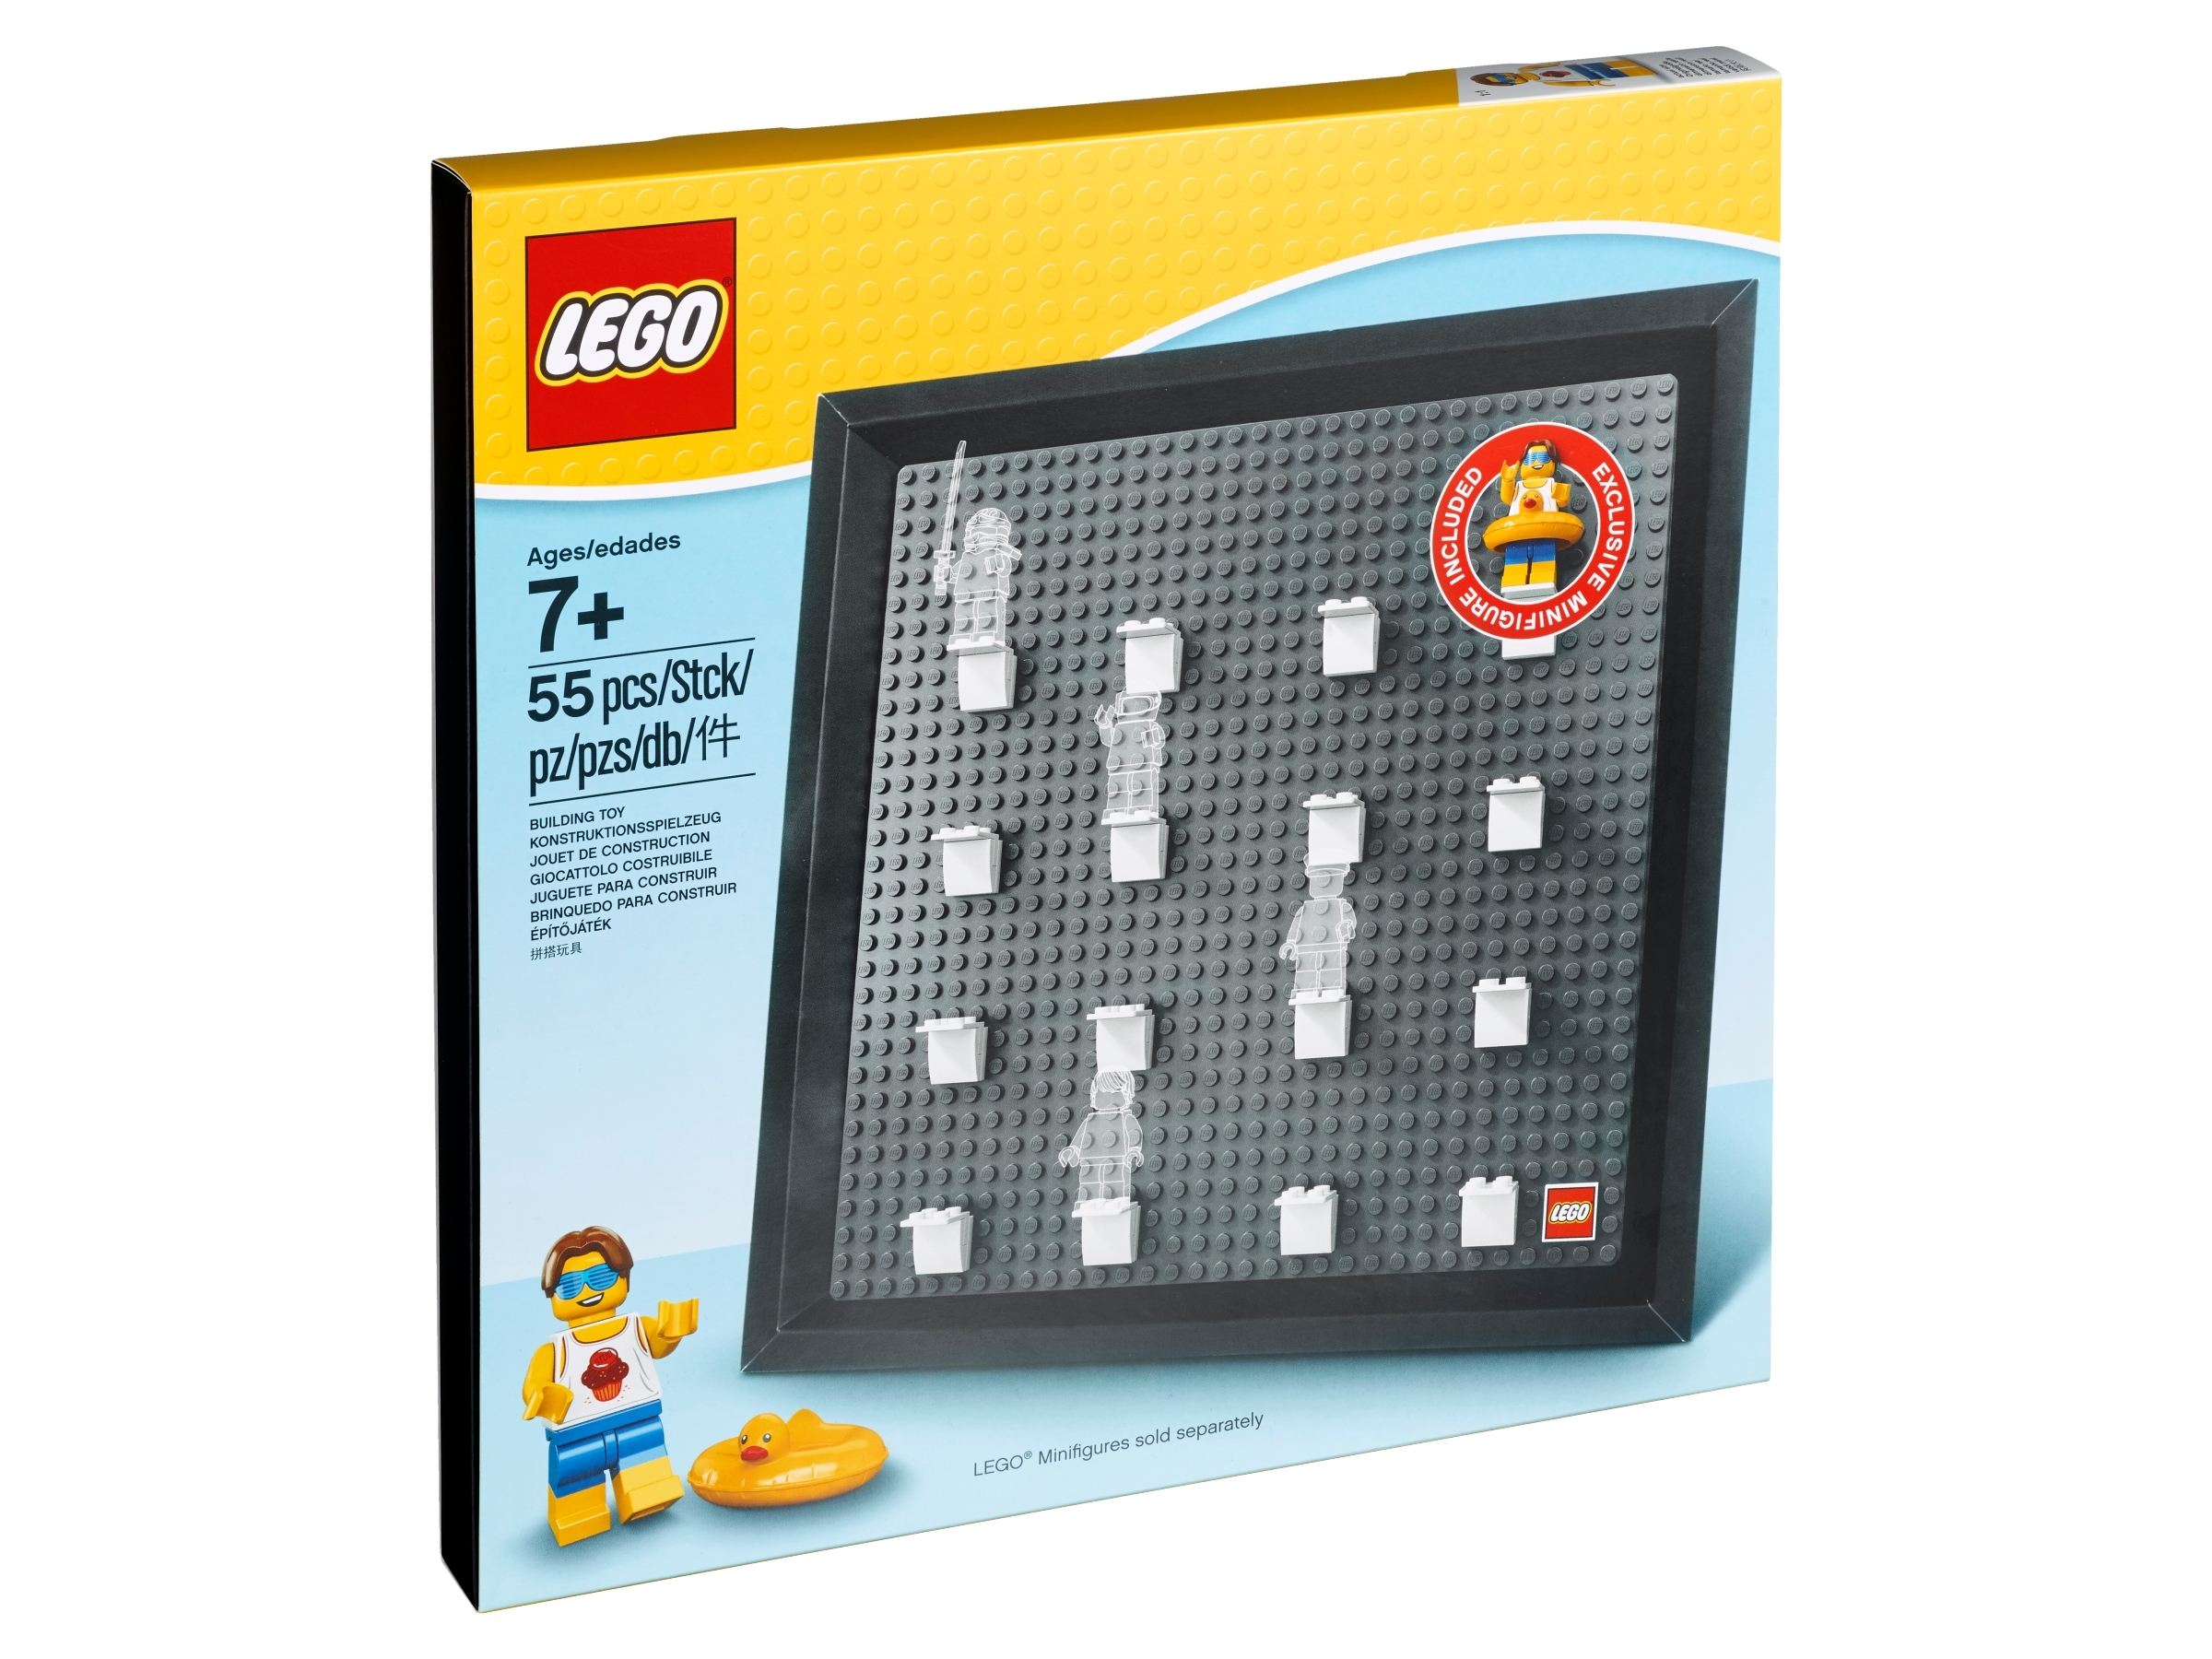 Lego minifigura coleccionista marco exclusivo minifigura recolector-Display 5005359 